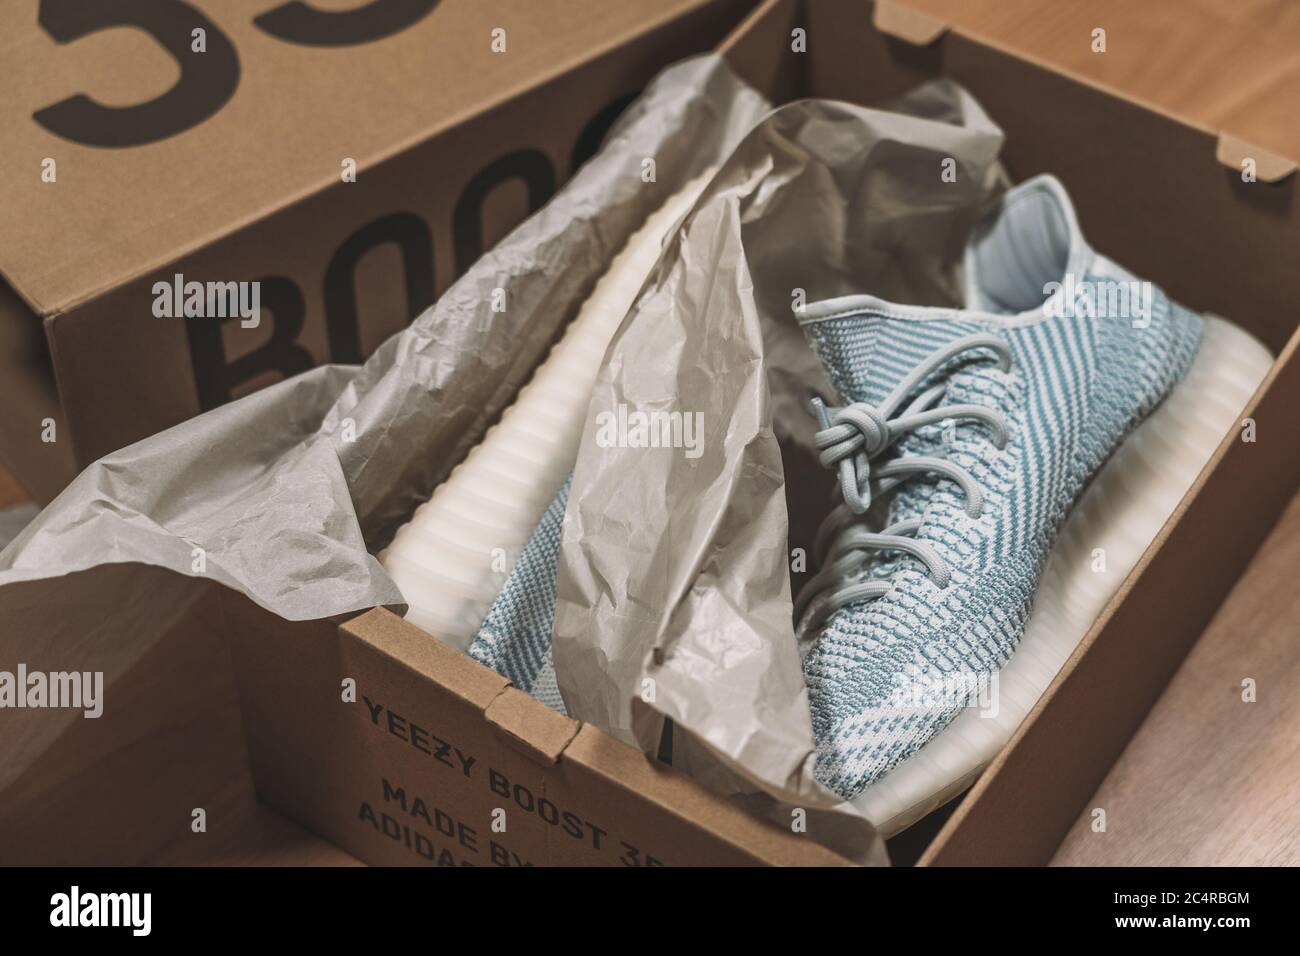 Moskau, Russland - Juni 2020 : Adidas Yeezy Boost 350 V2 Cloud White - berühmte Limited Collection Fashion Sneakers von Kanye West und Adidas Collaboration, trendige Sportschuhe. Stockfoto